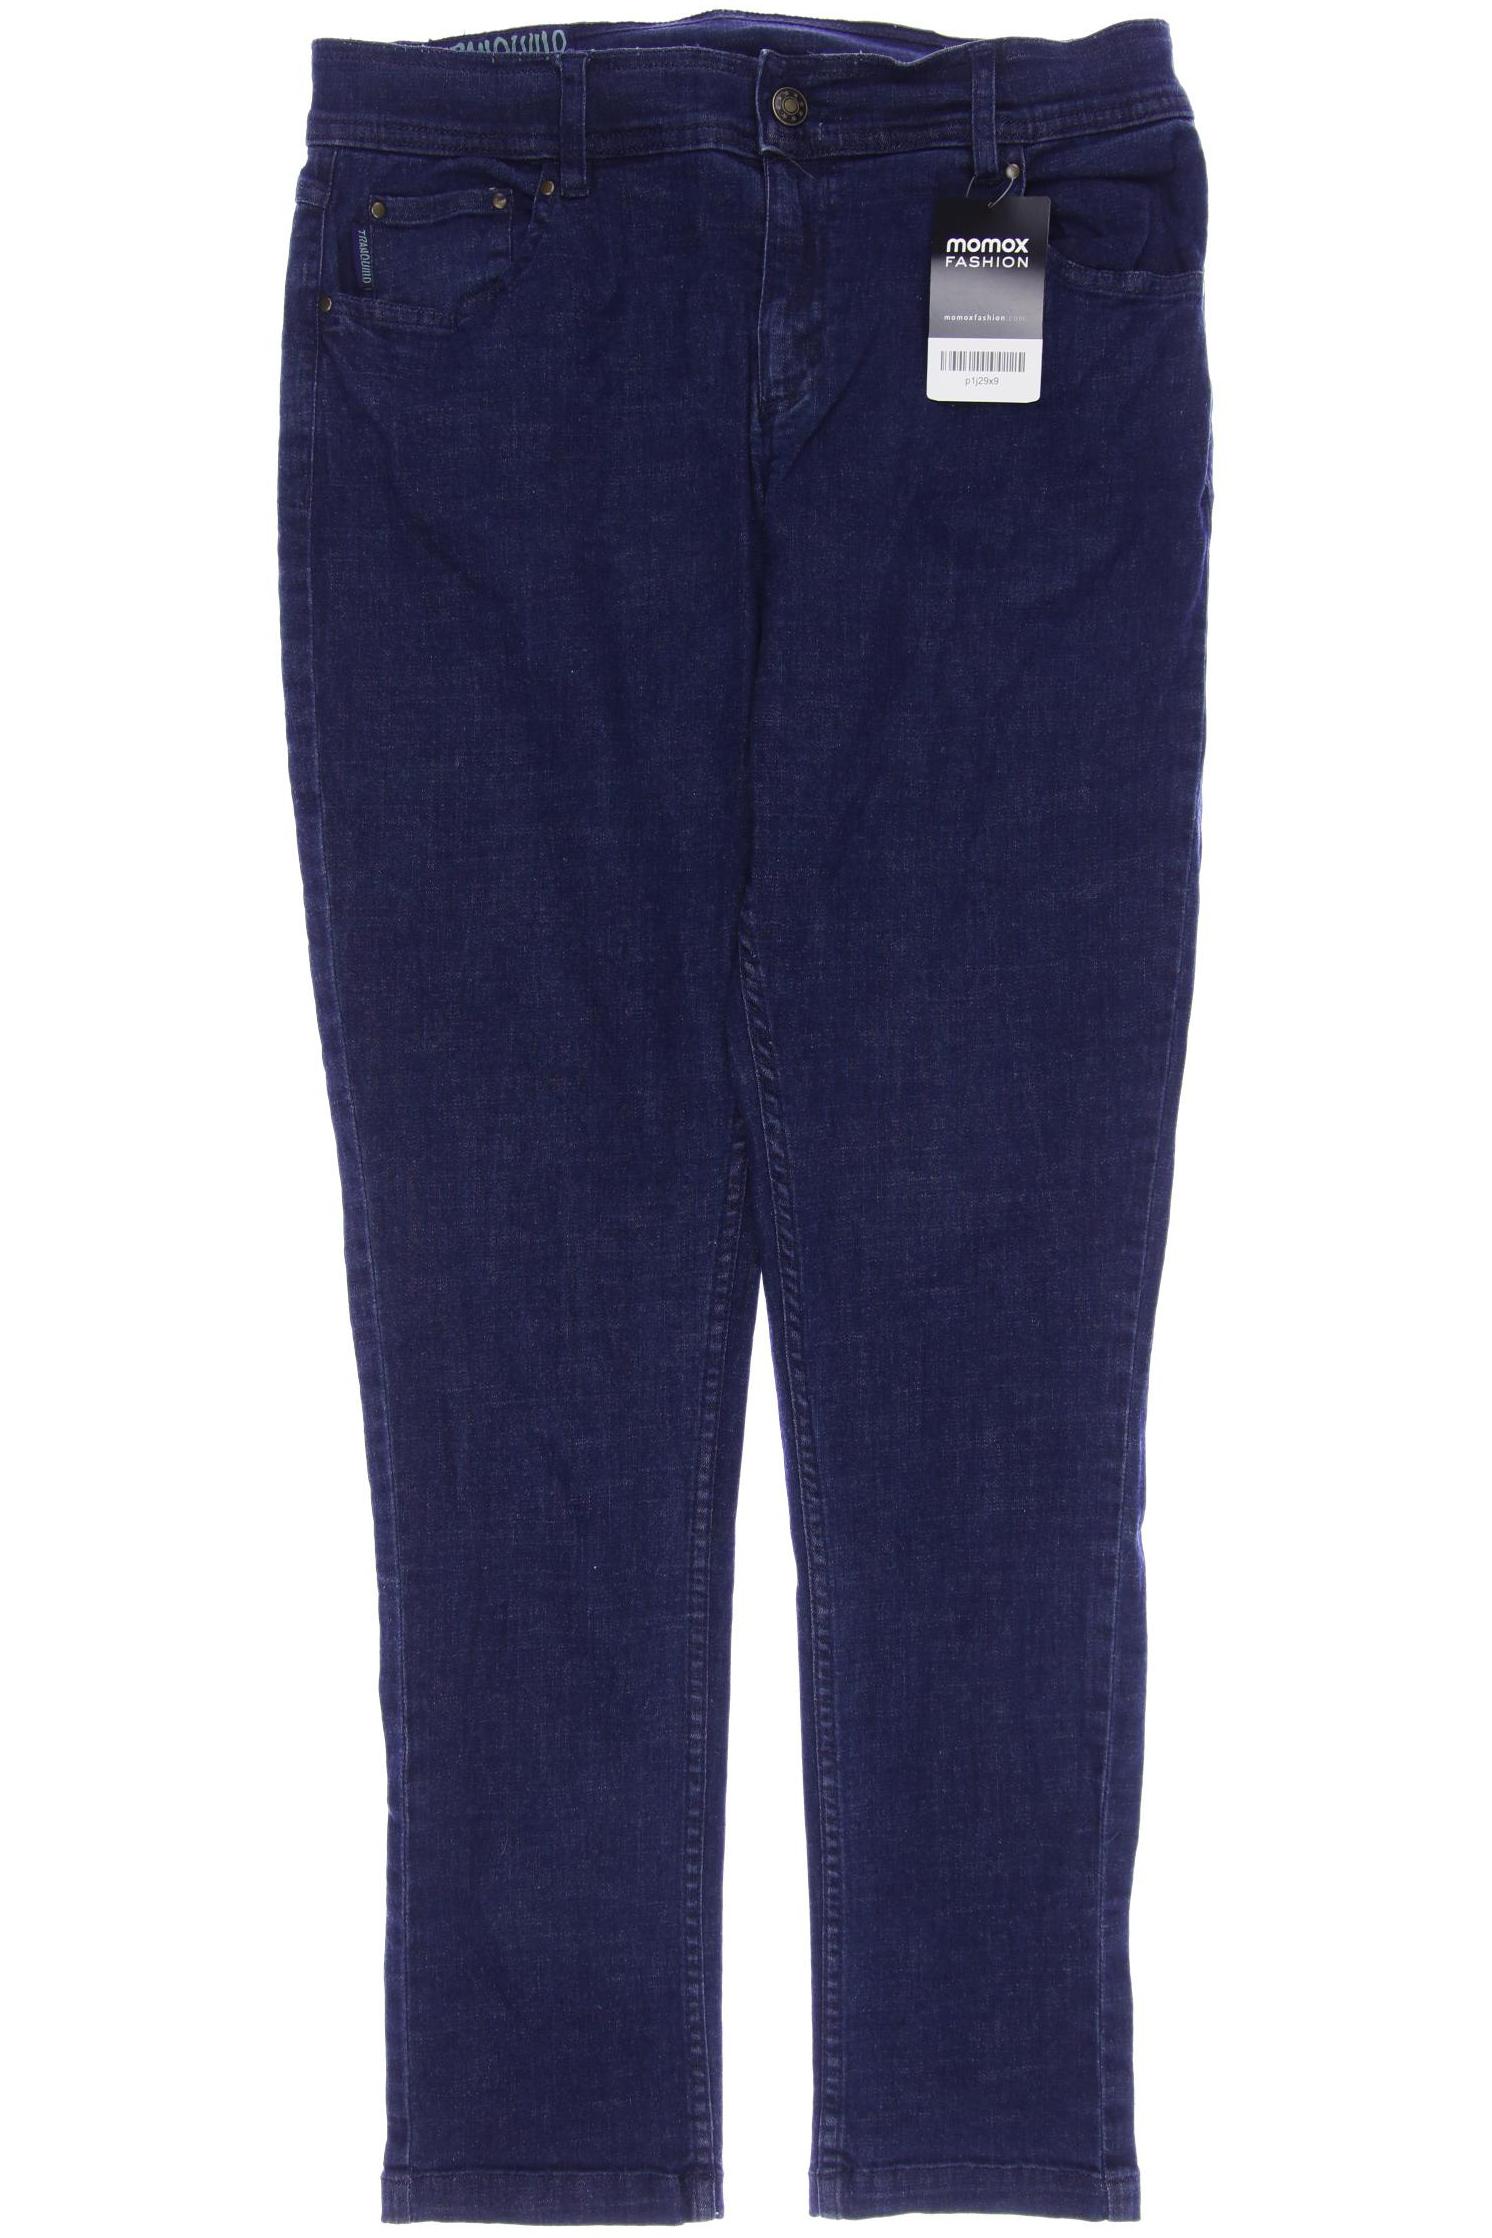 TRANQUILLO Damen Jeans, marineblau von TRANQUILLO